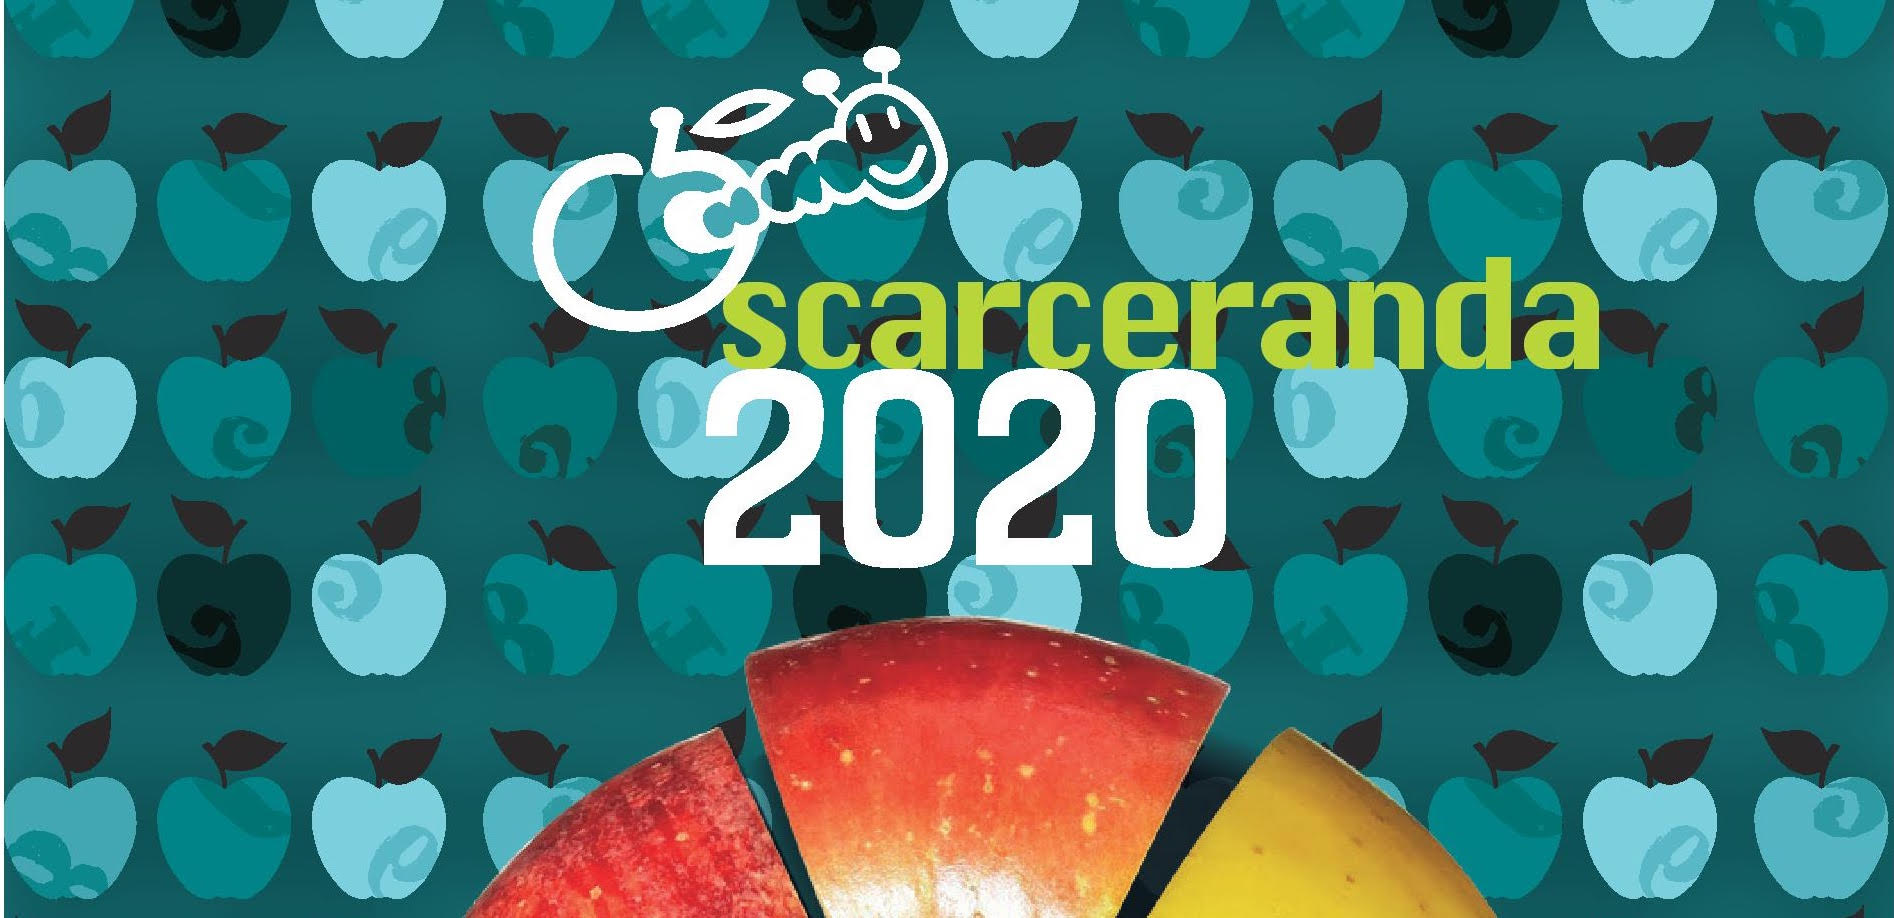 SCARCERANDA 2020 è pronta: liberati dagli impegni e… dai cattivi pensieri!